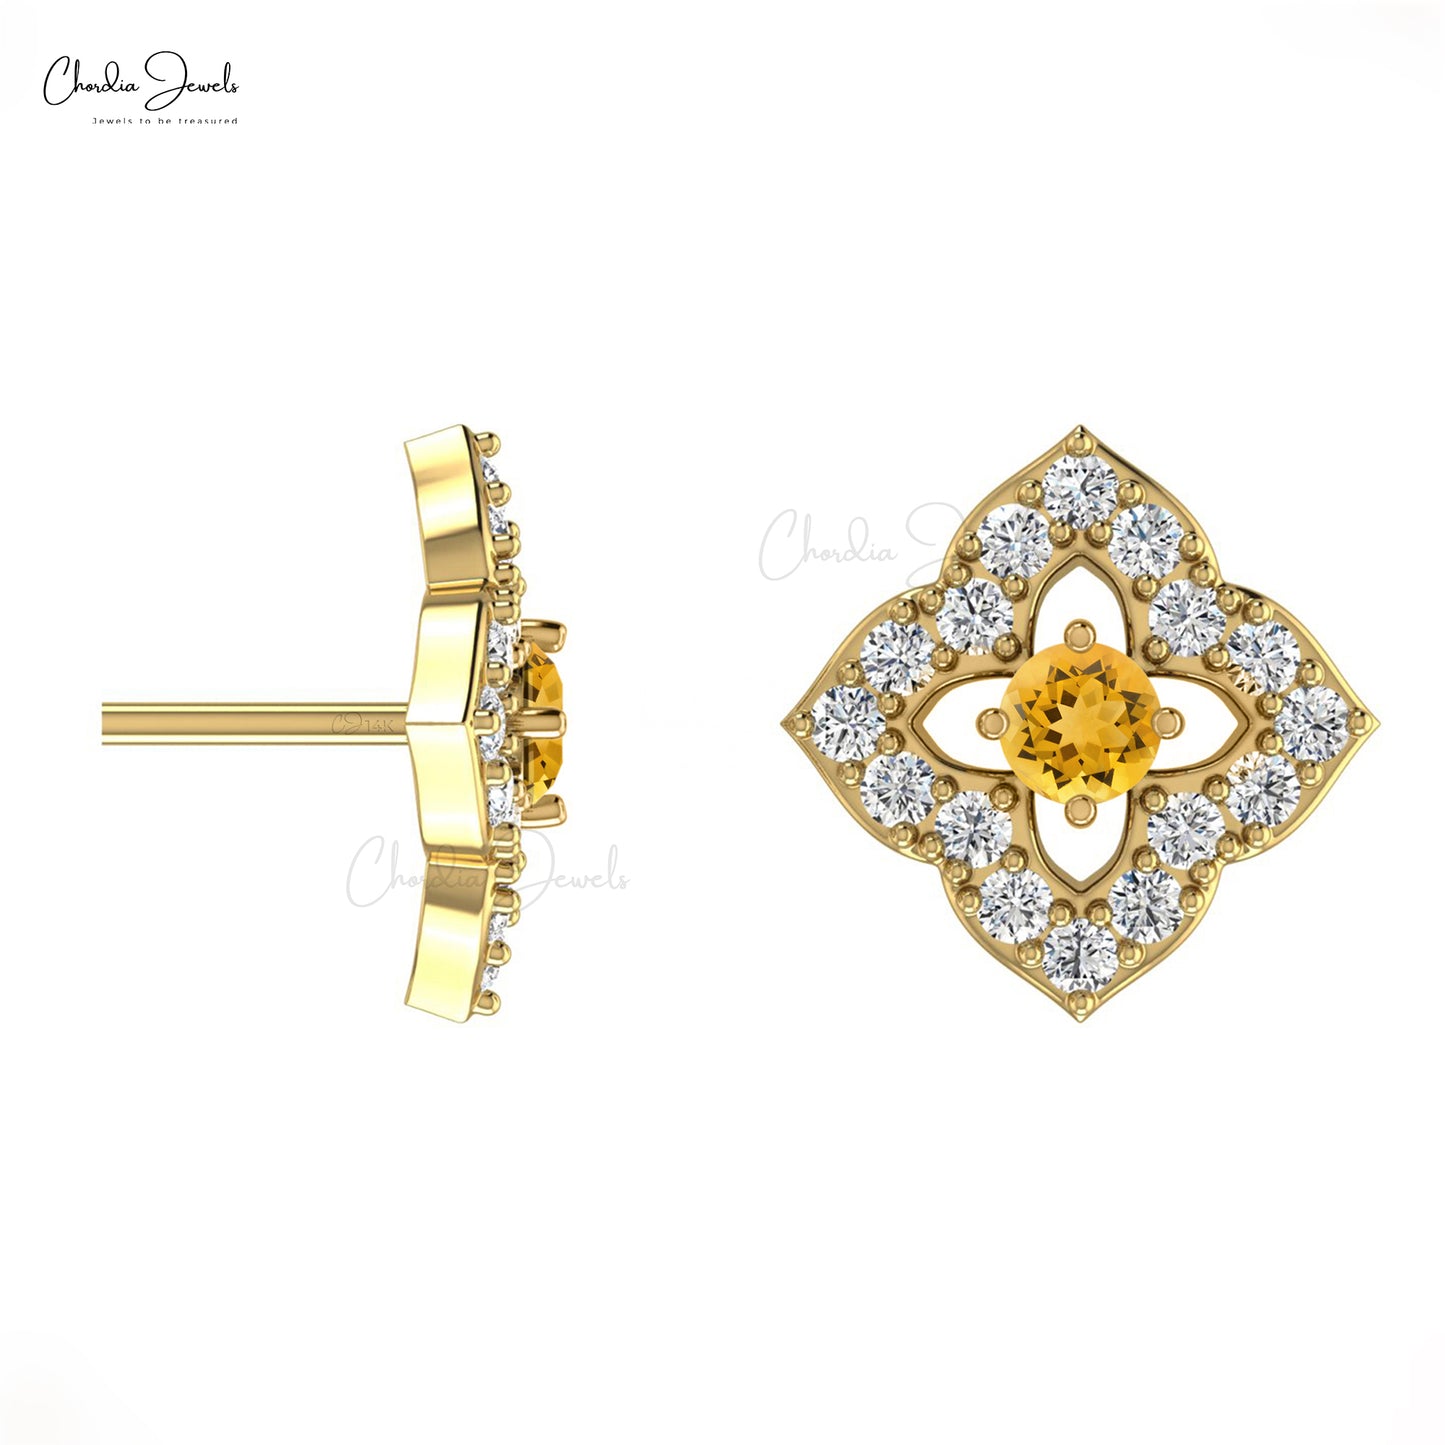 Genuine Floral Diamond Studs Earring 14k Real Gold 0.06ct Citrine Gemstone Small Earrings